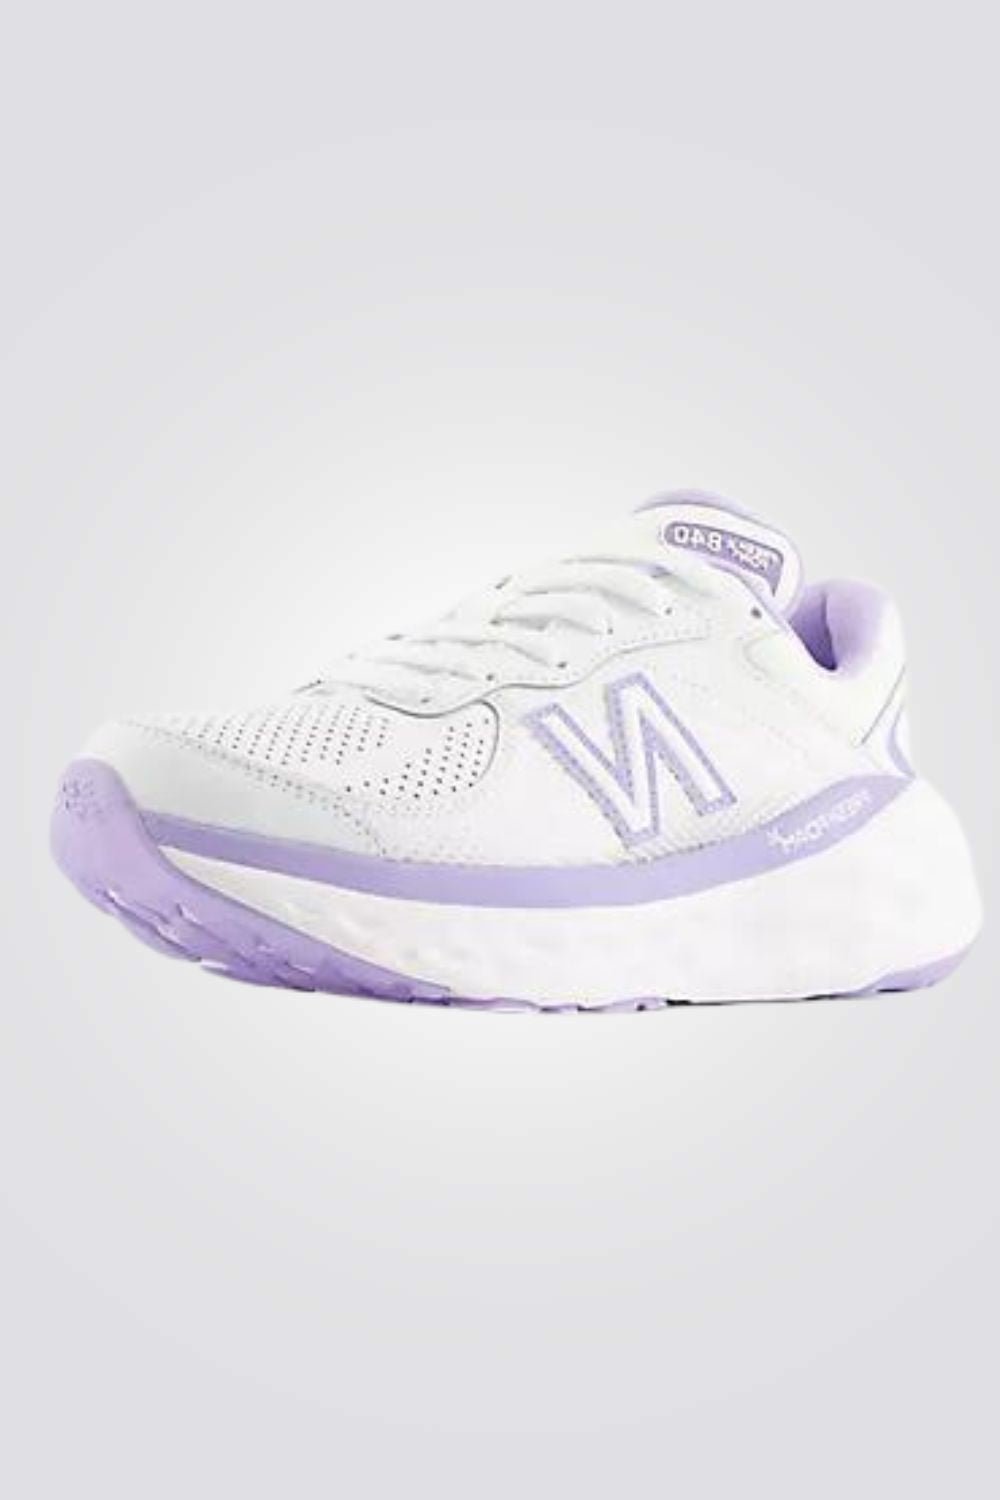 NEW BALANCE - נעלי ספורט לנשים WW840FW1 בצבע לבן וסגול - MASHBIR//365